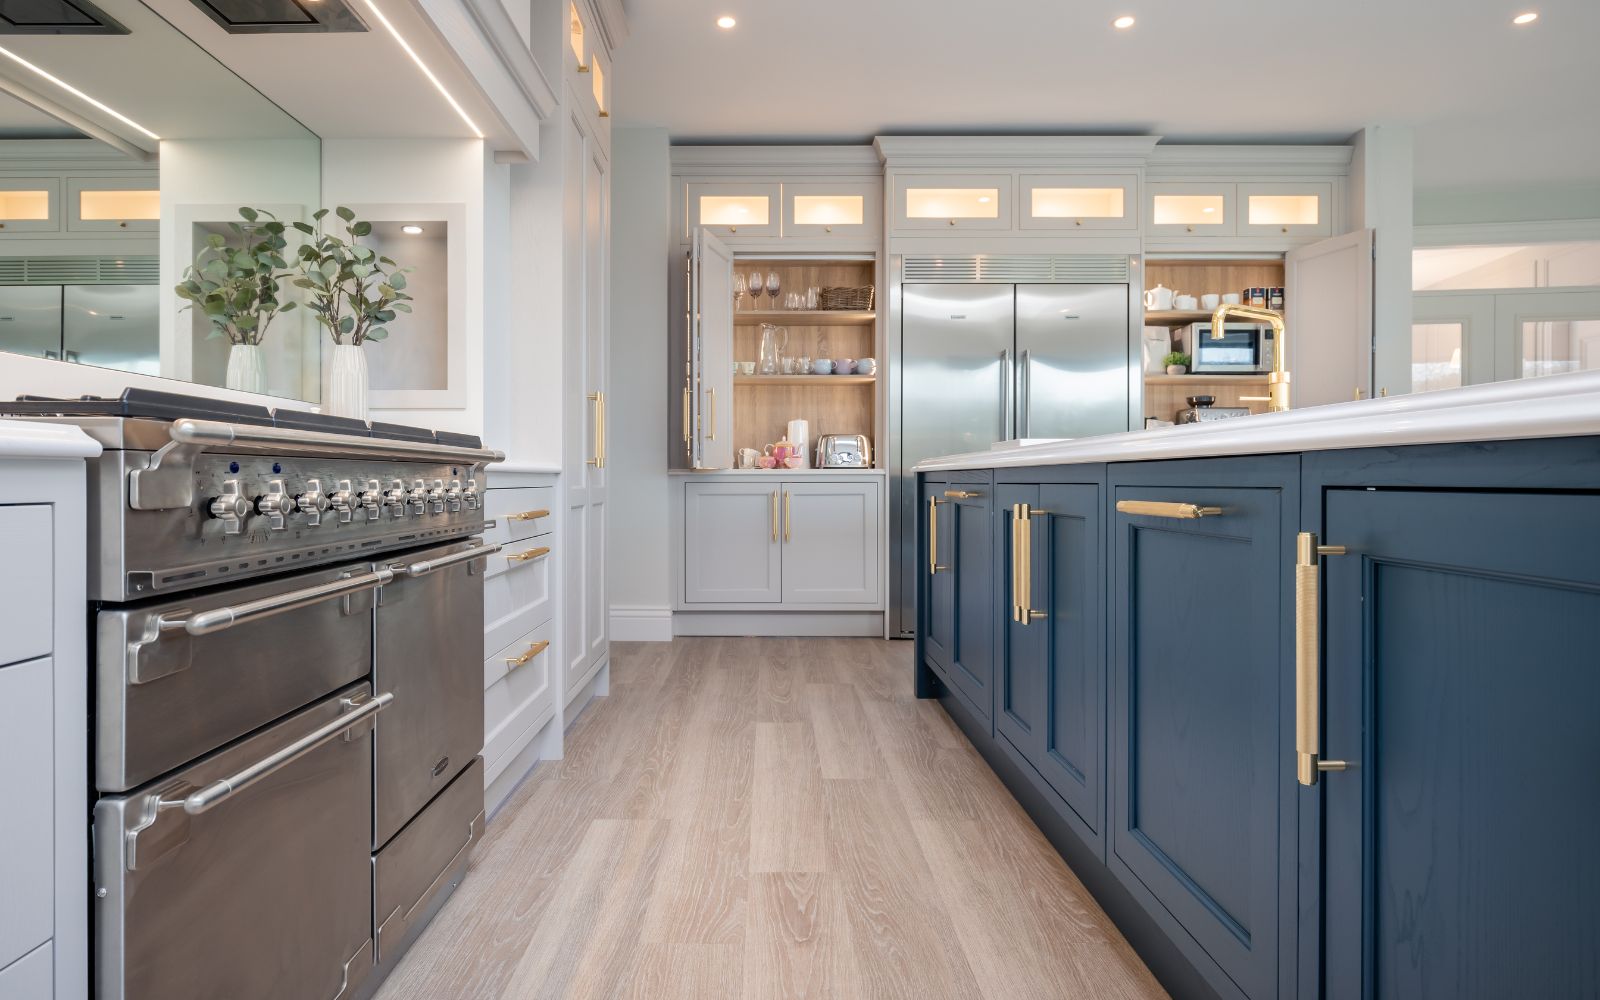 Stunning modern kitchen off white with navy island Buster & Punch brass cabinet handles